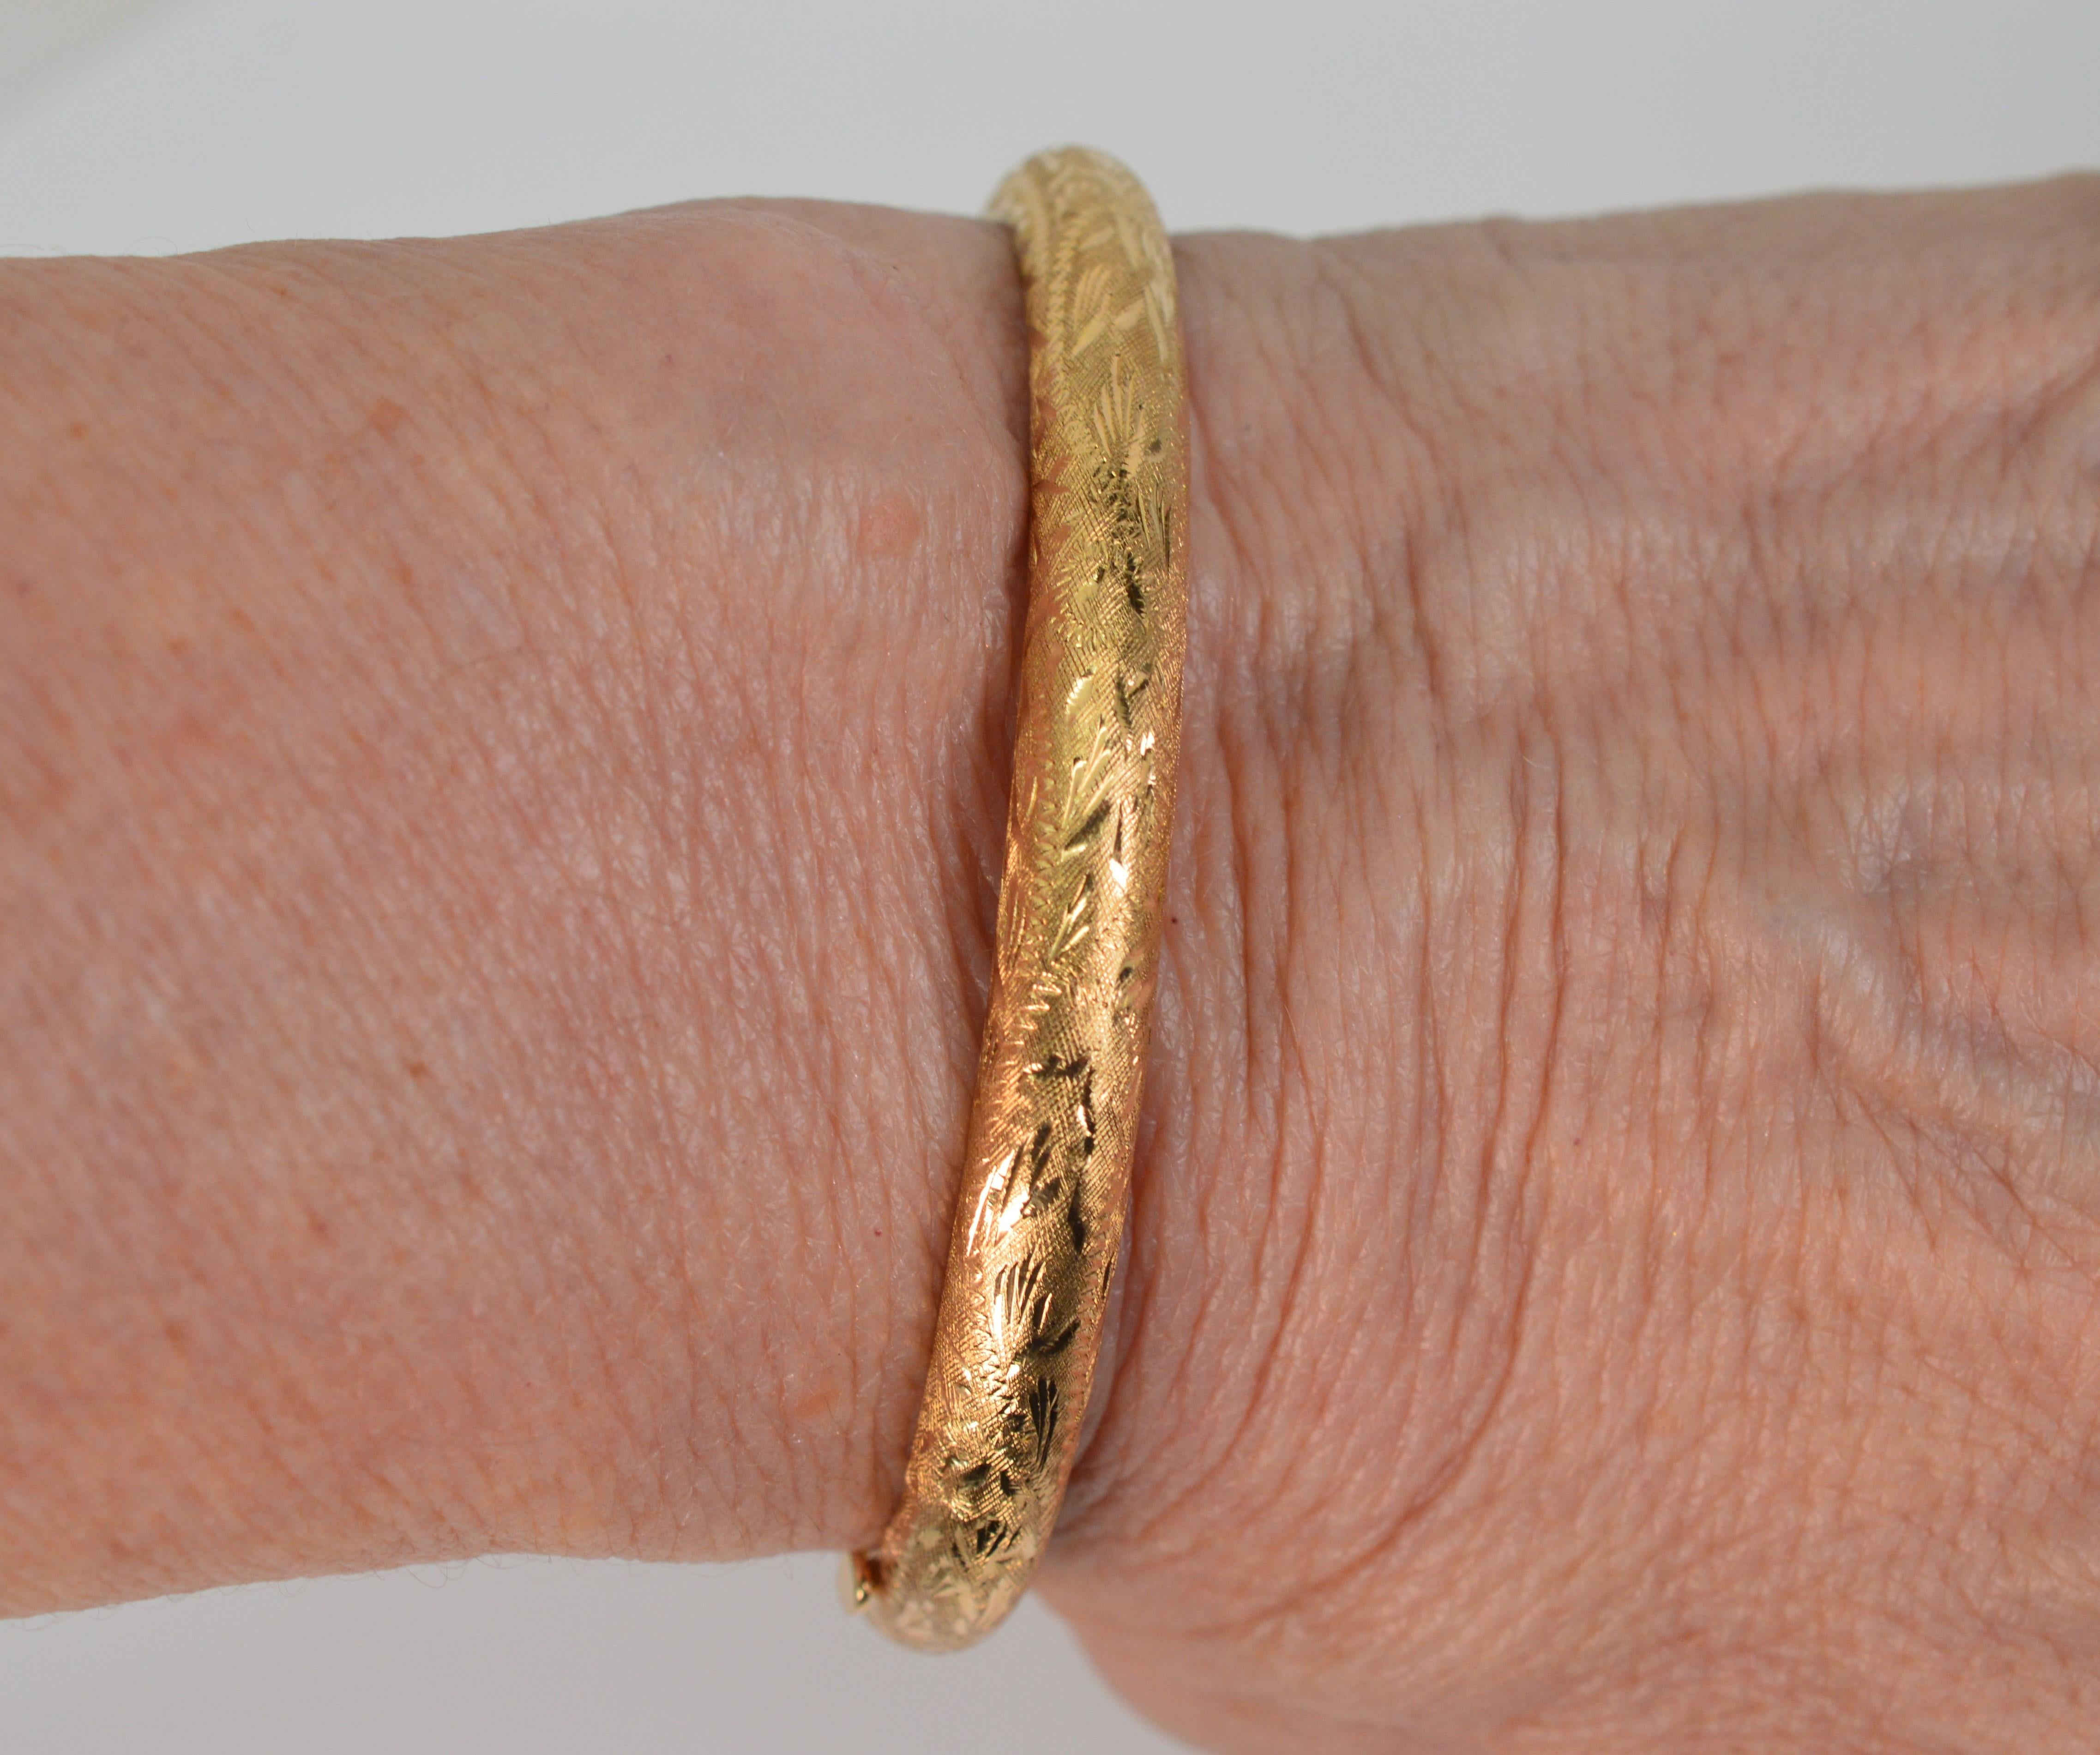 14 karat gold bangle bracelet